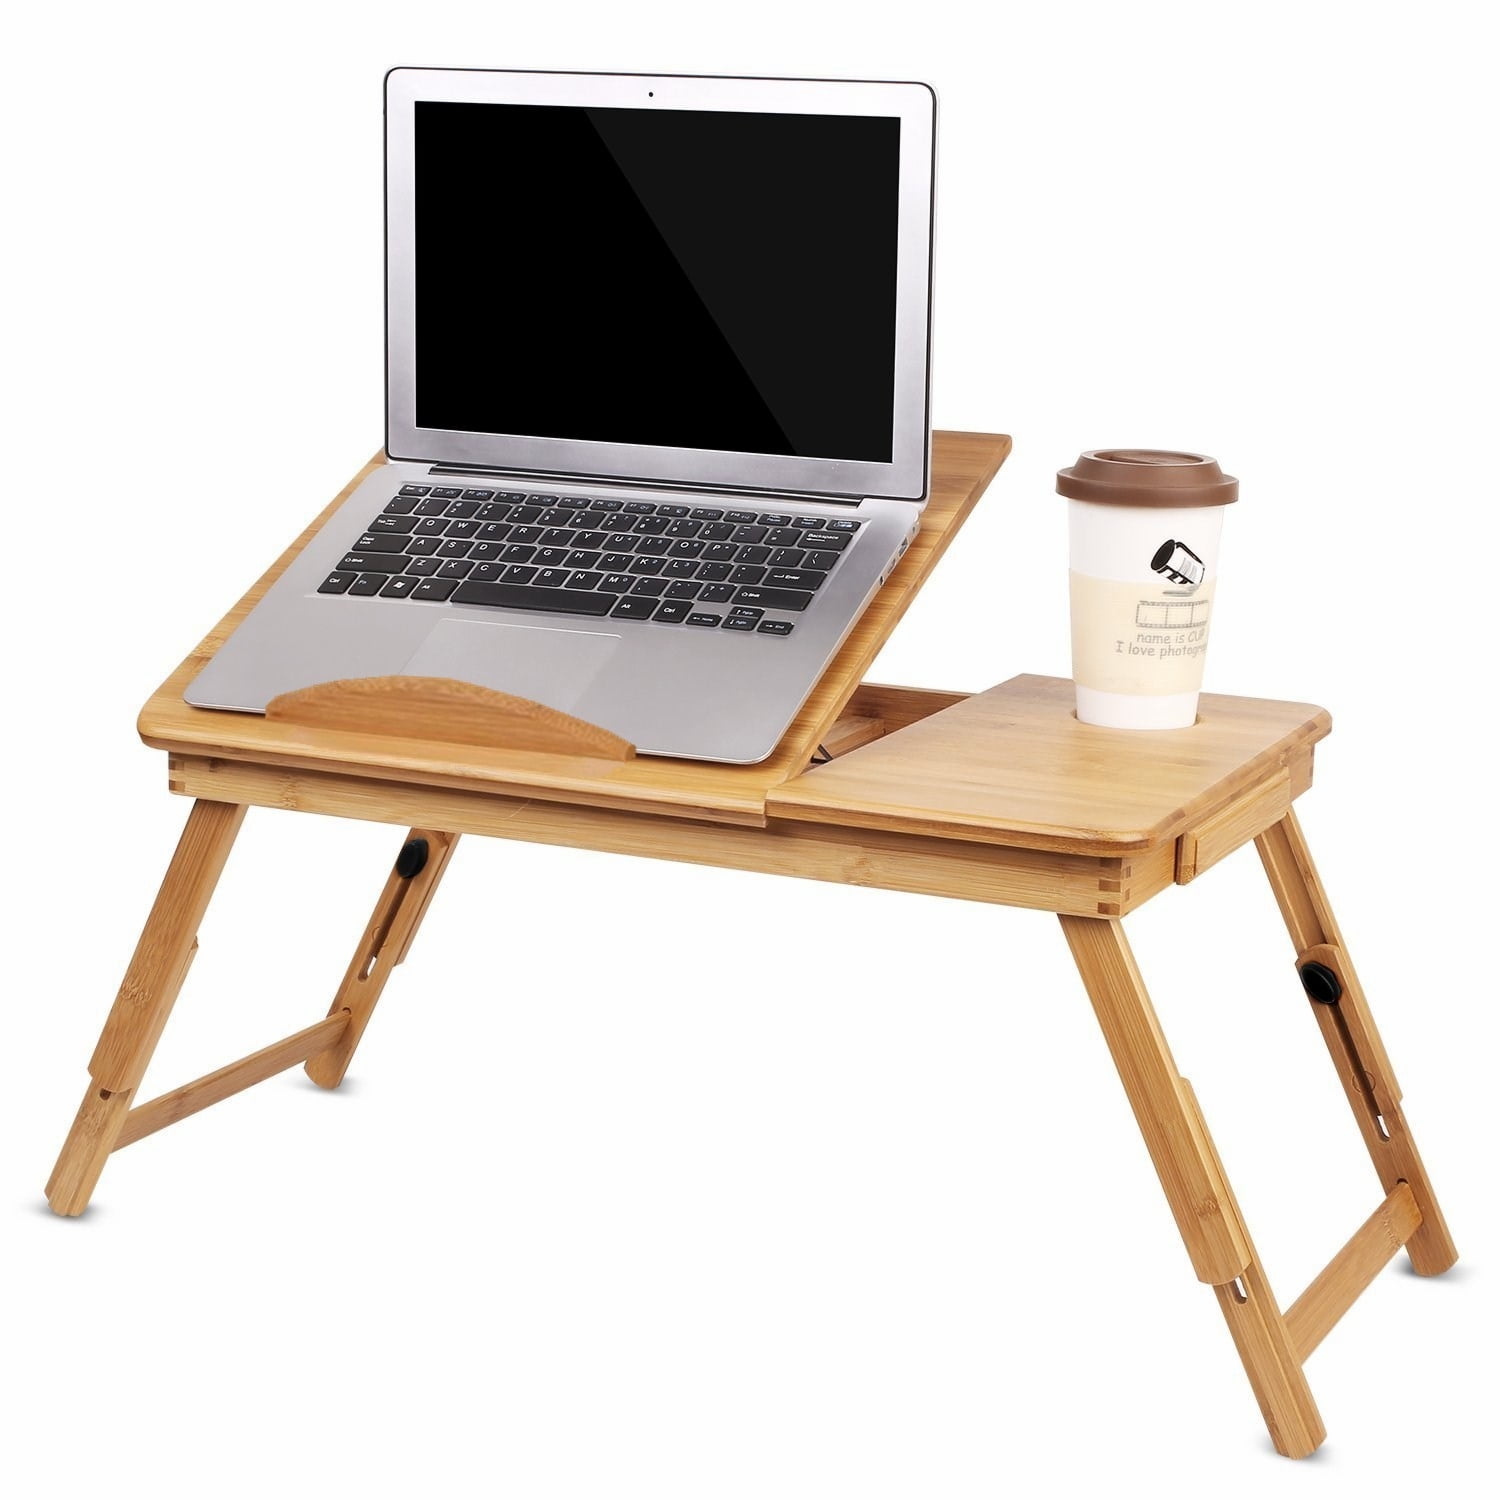 Yosoo Foldable Bamboo Laptop Desk Tray Breakfast Serving Bed Trays